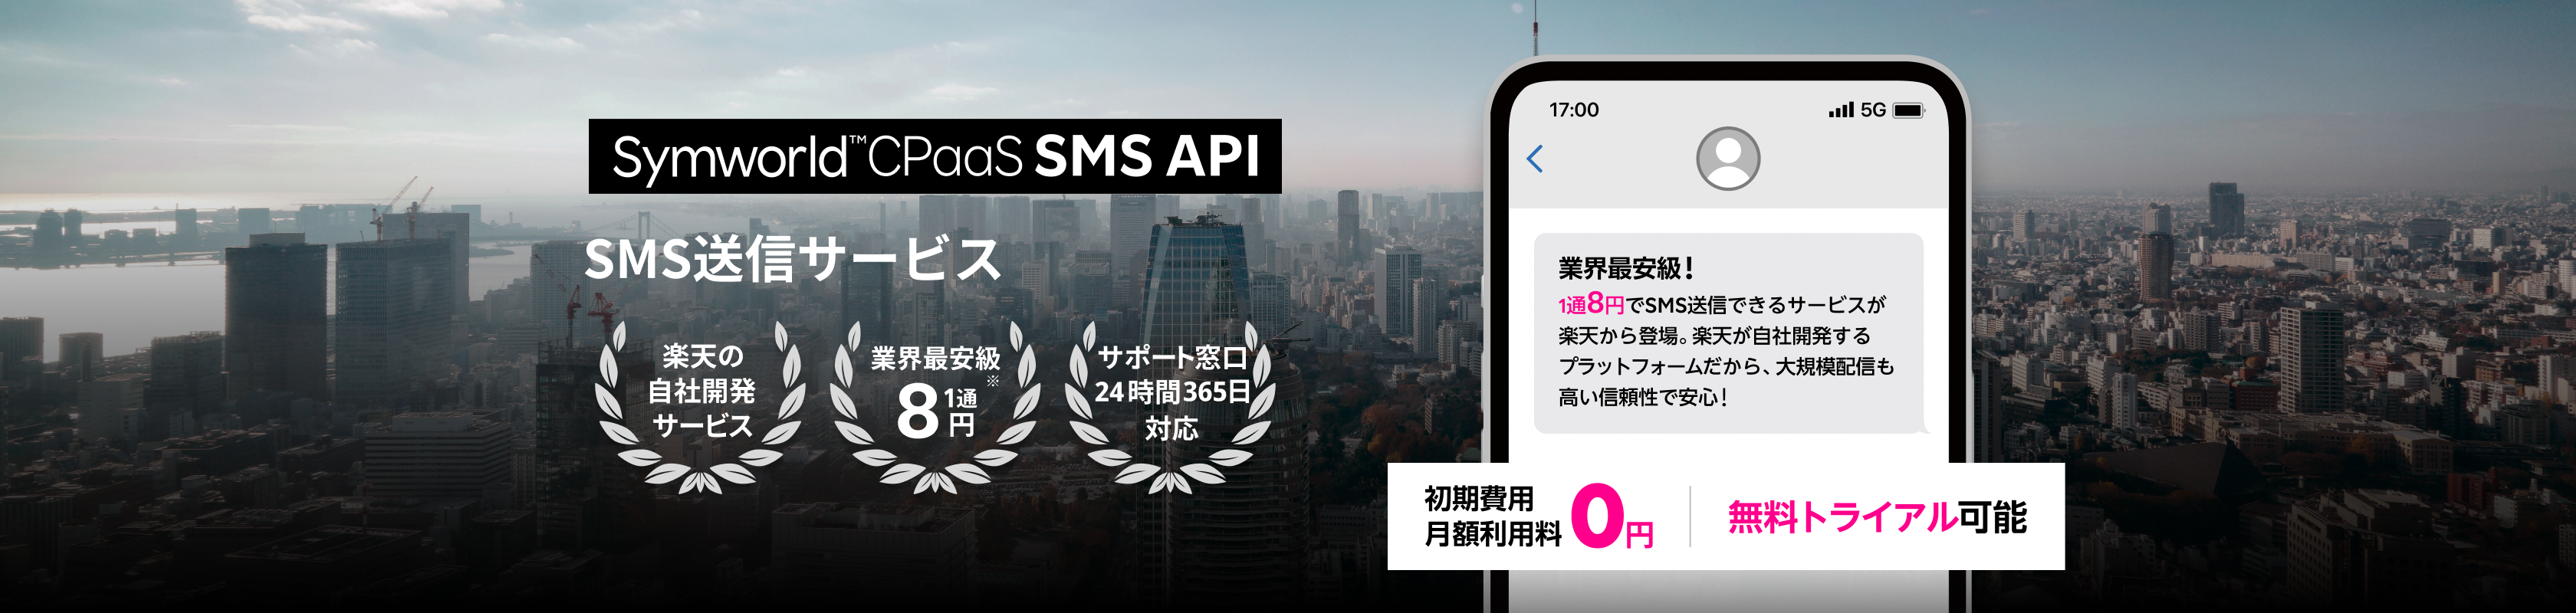 Symworld CPaaS SMS API